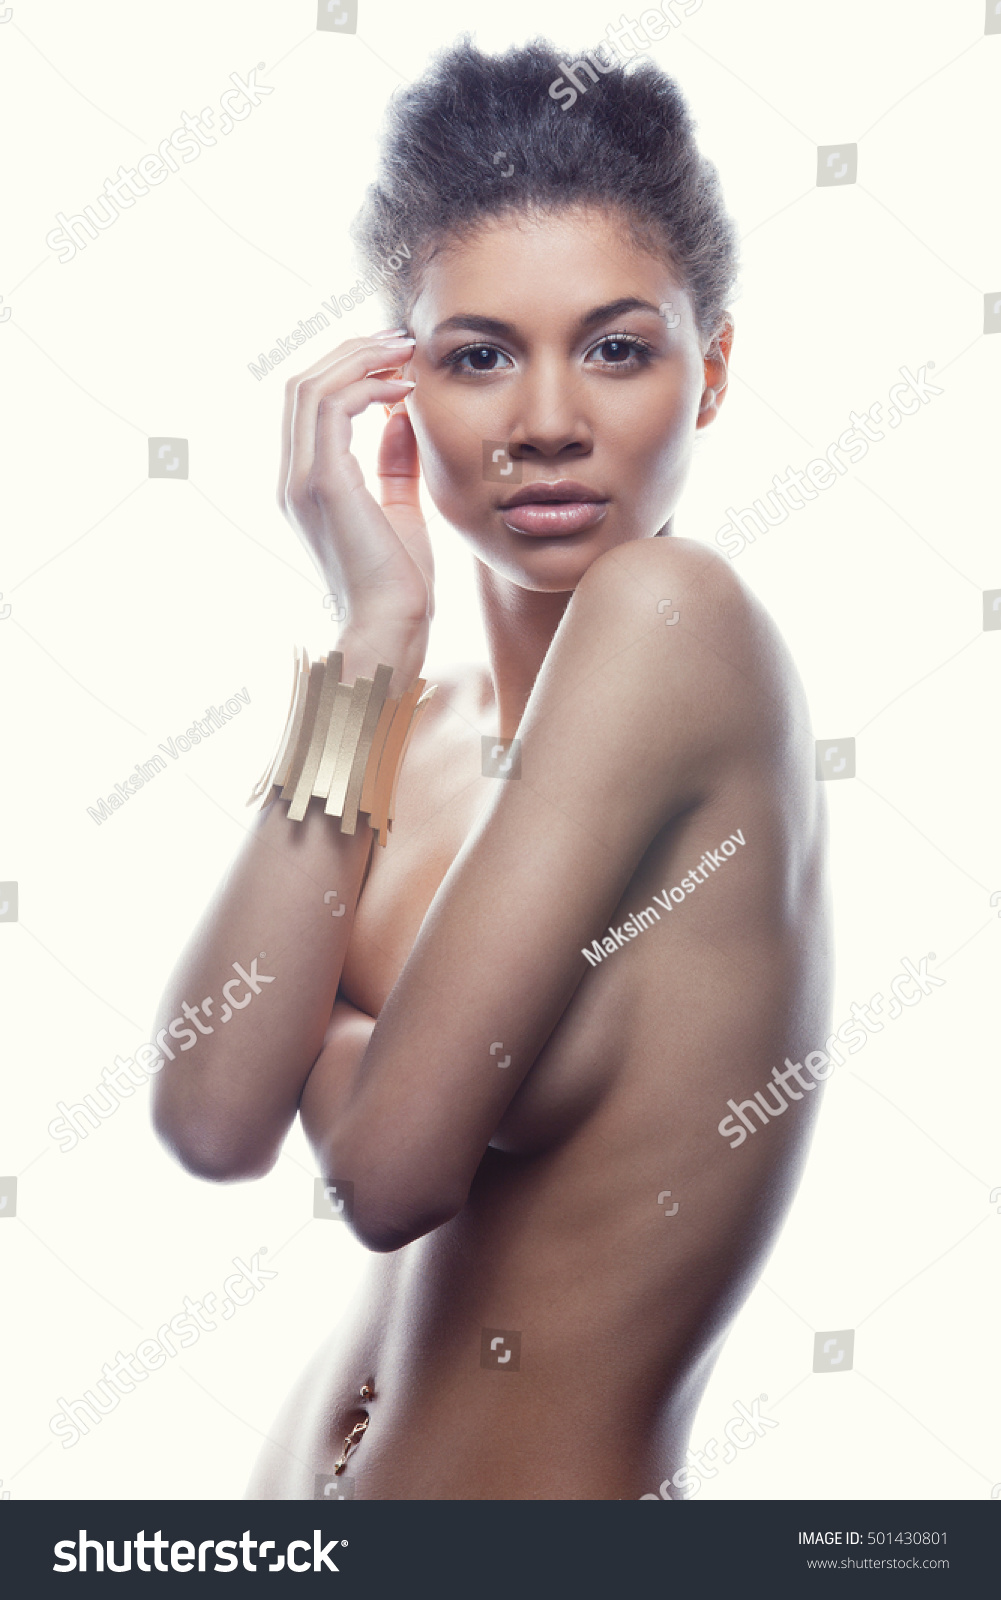 Beautiful Female Nudes